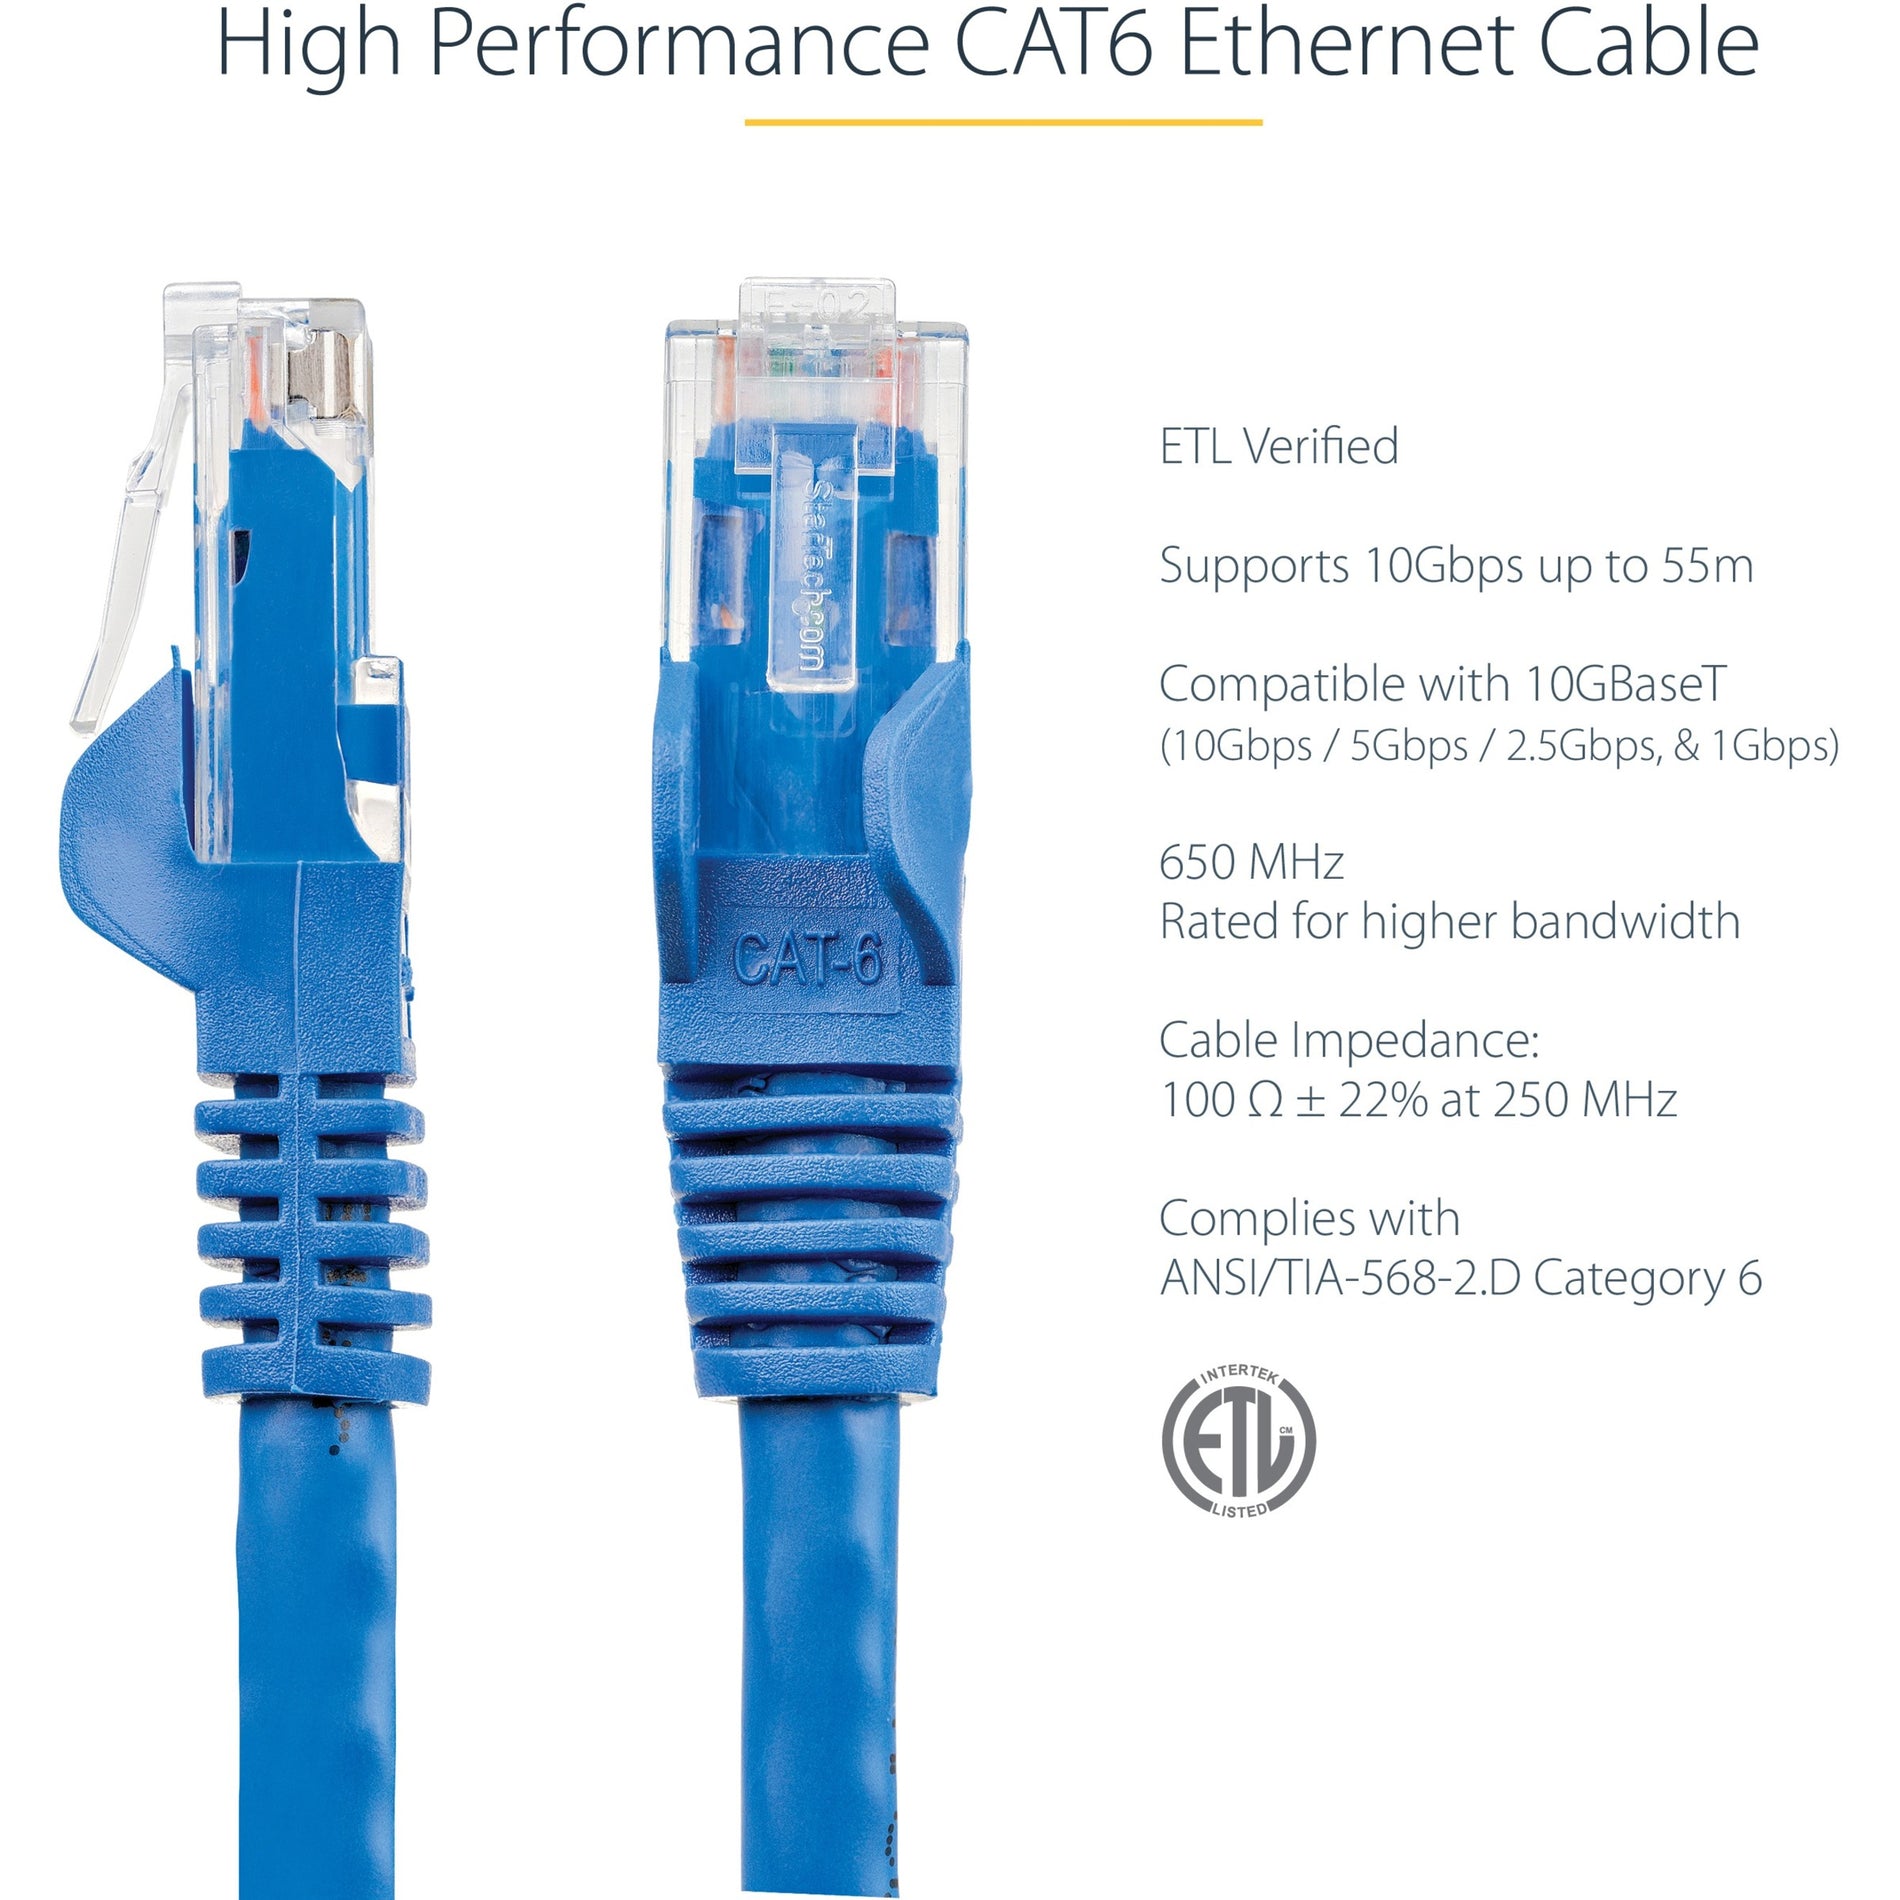 StarTech.com N6PATCH25BL 25 ft Blue Snagless Cat6 Patch Cable, ETL Verified